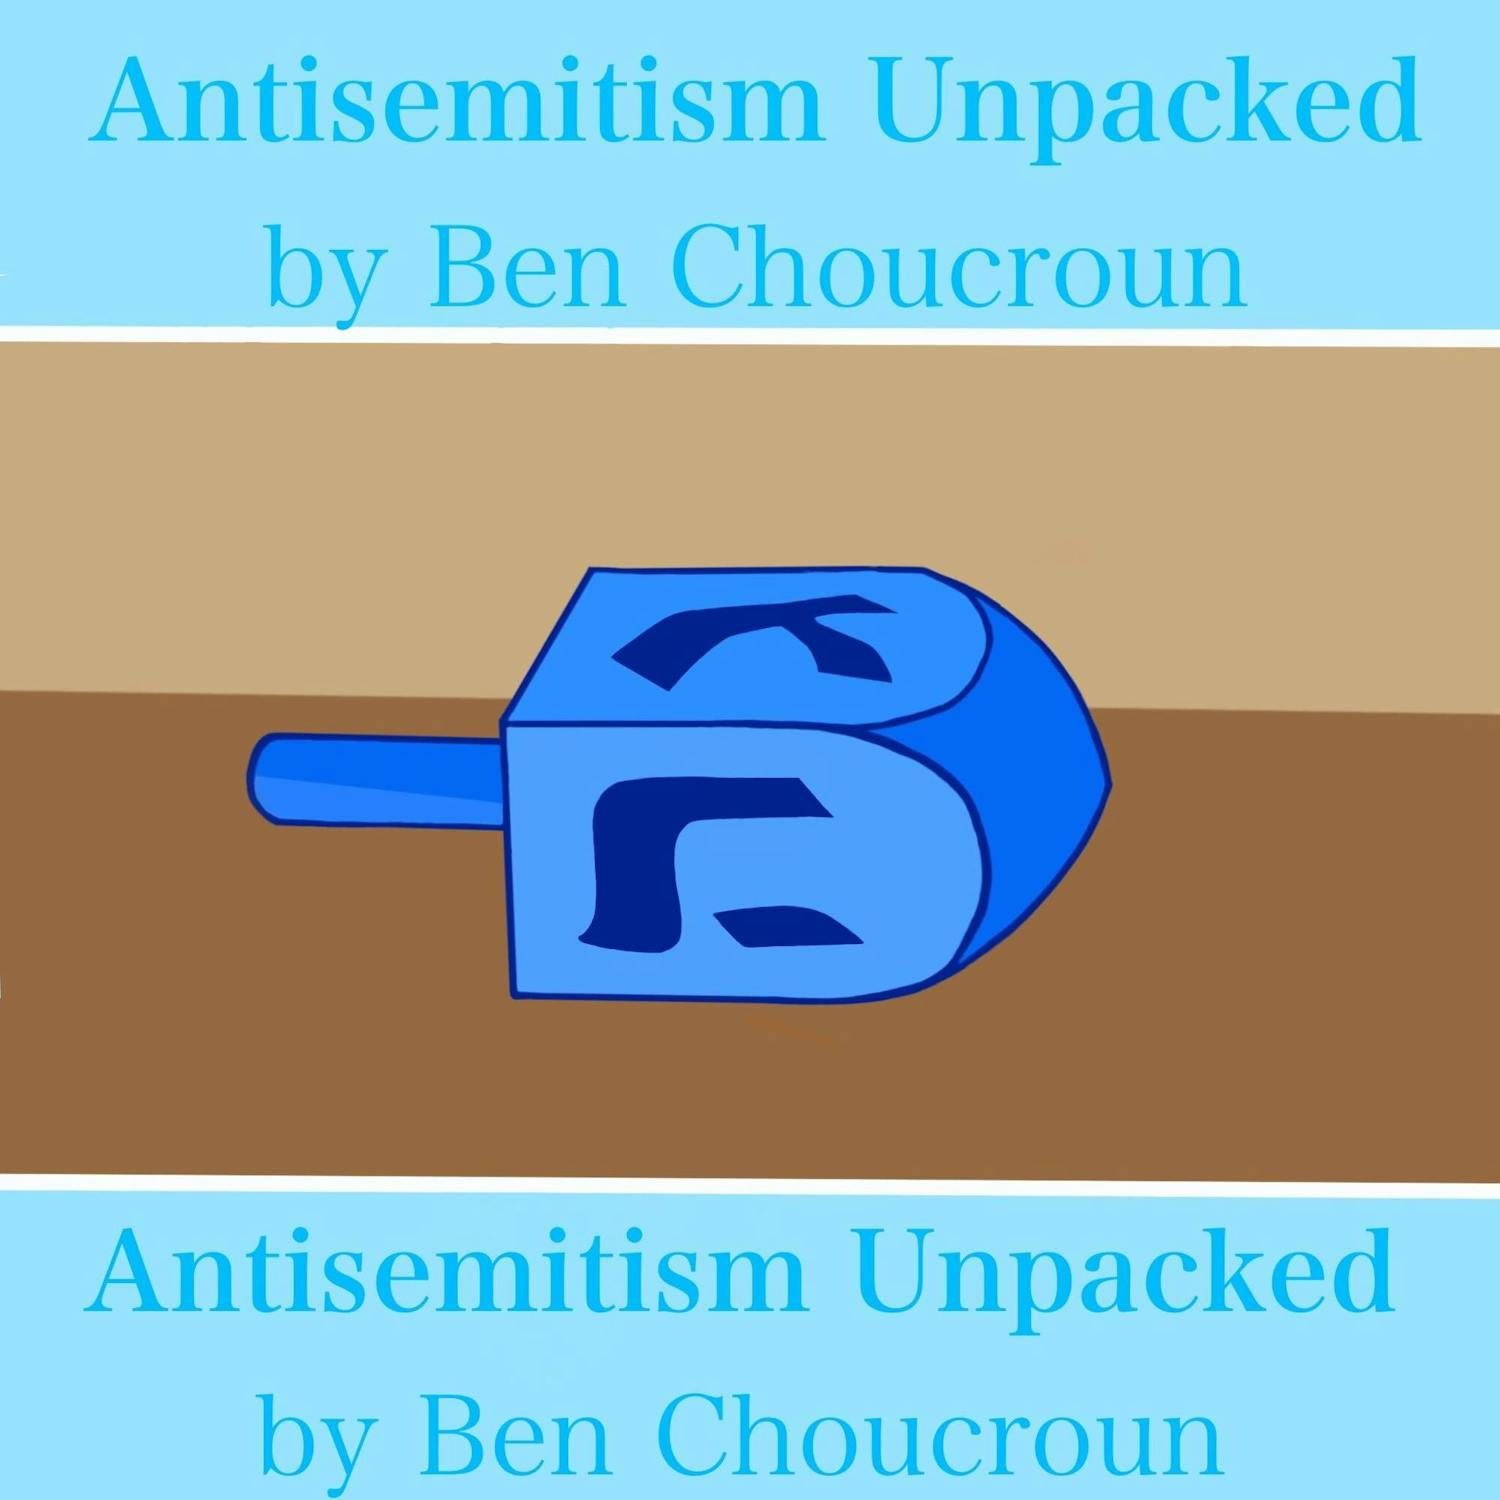 Replacement graphic for Ben Choucroun's column "Antisemitism Unpacked by Ben Choucroun"